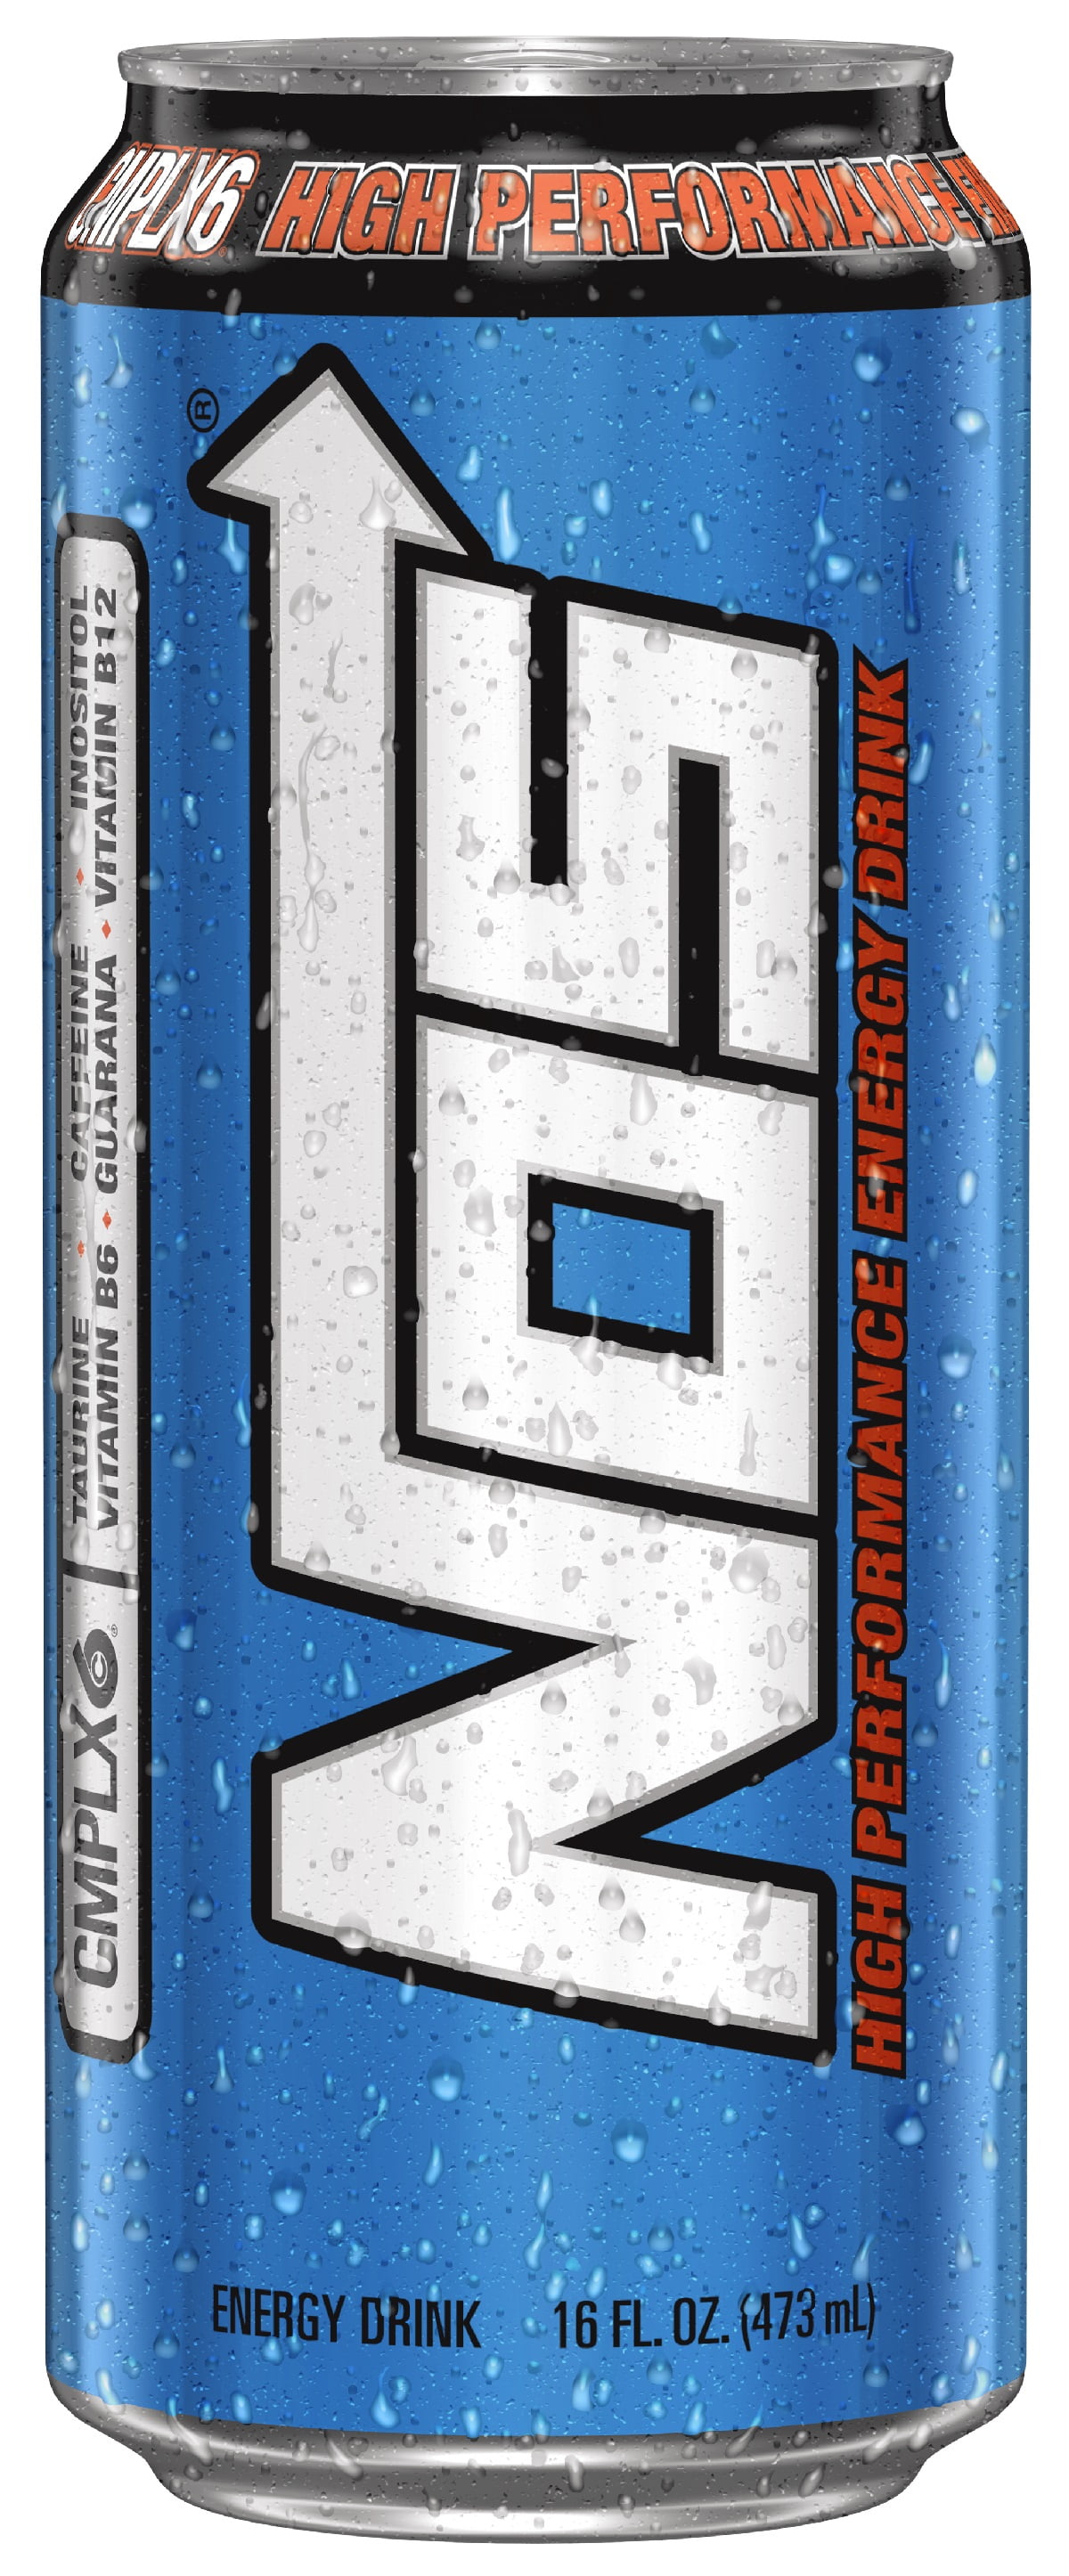 Buy Nos High Performance Energy Drink Original 16 Fl Oz 8 Pack